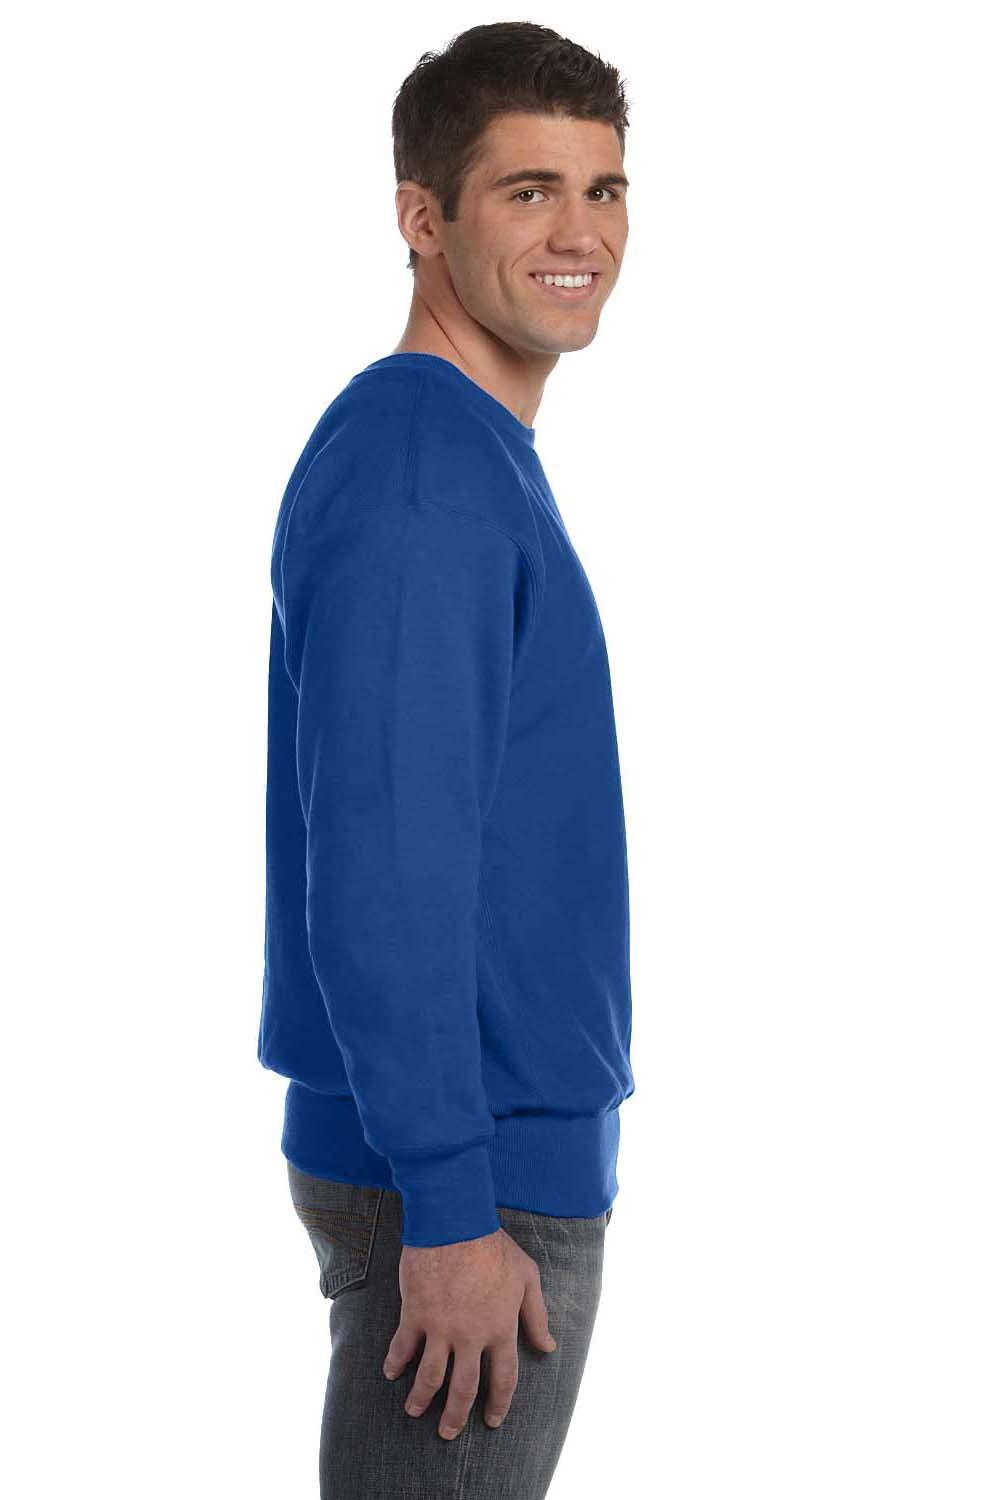 Champion S1049 Mens Crewneck Sweatshirt Royal Blue Side